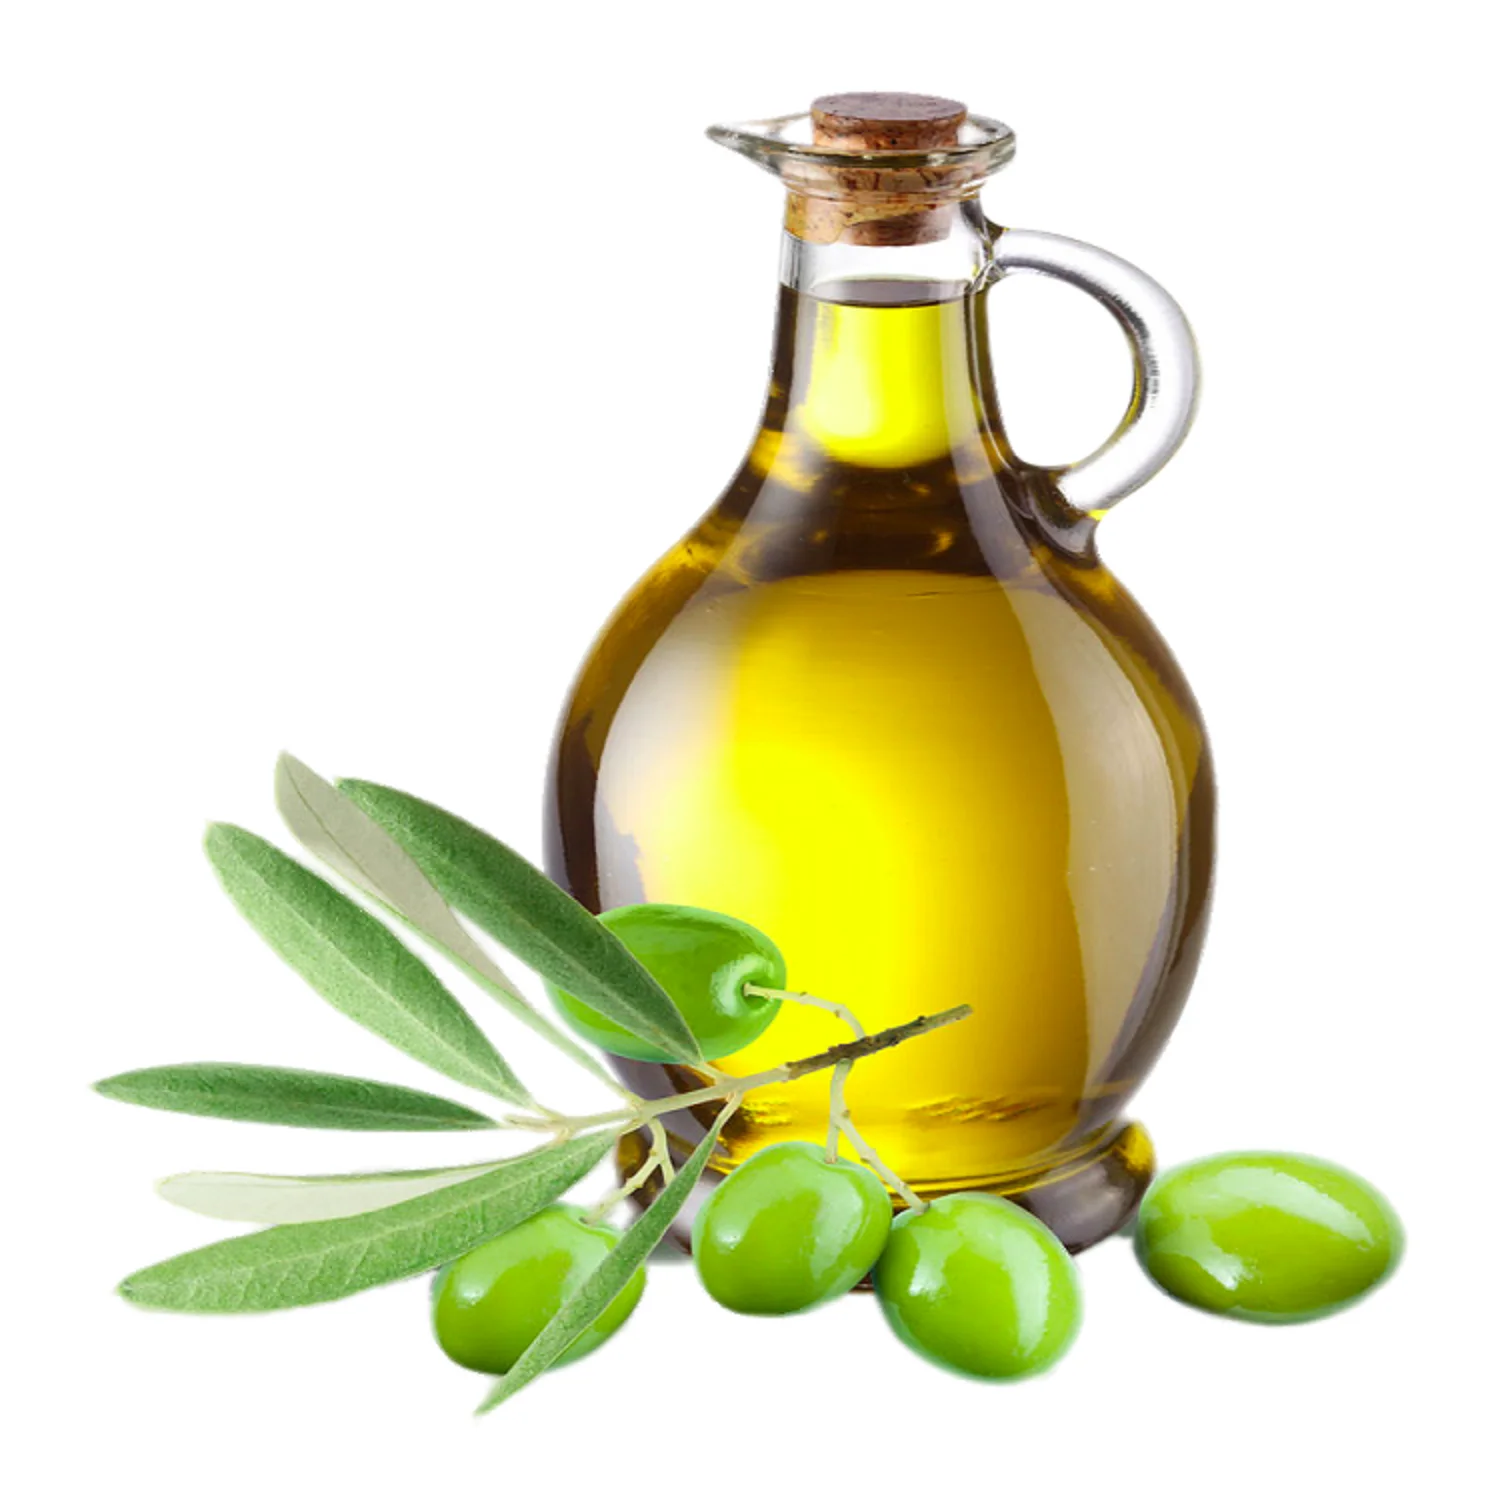 Olive Oil масло оливковое. Олив Ойл масло оливковое. Масло оливковое natural Olive Oil. Масло оливы, жожоба оливы.